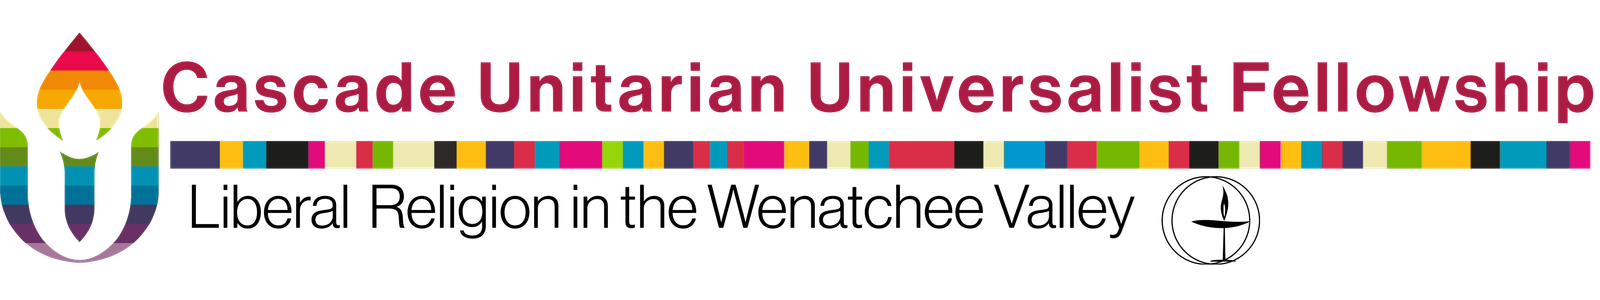 Cascade Unitarian Universalist Fellowship Logo